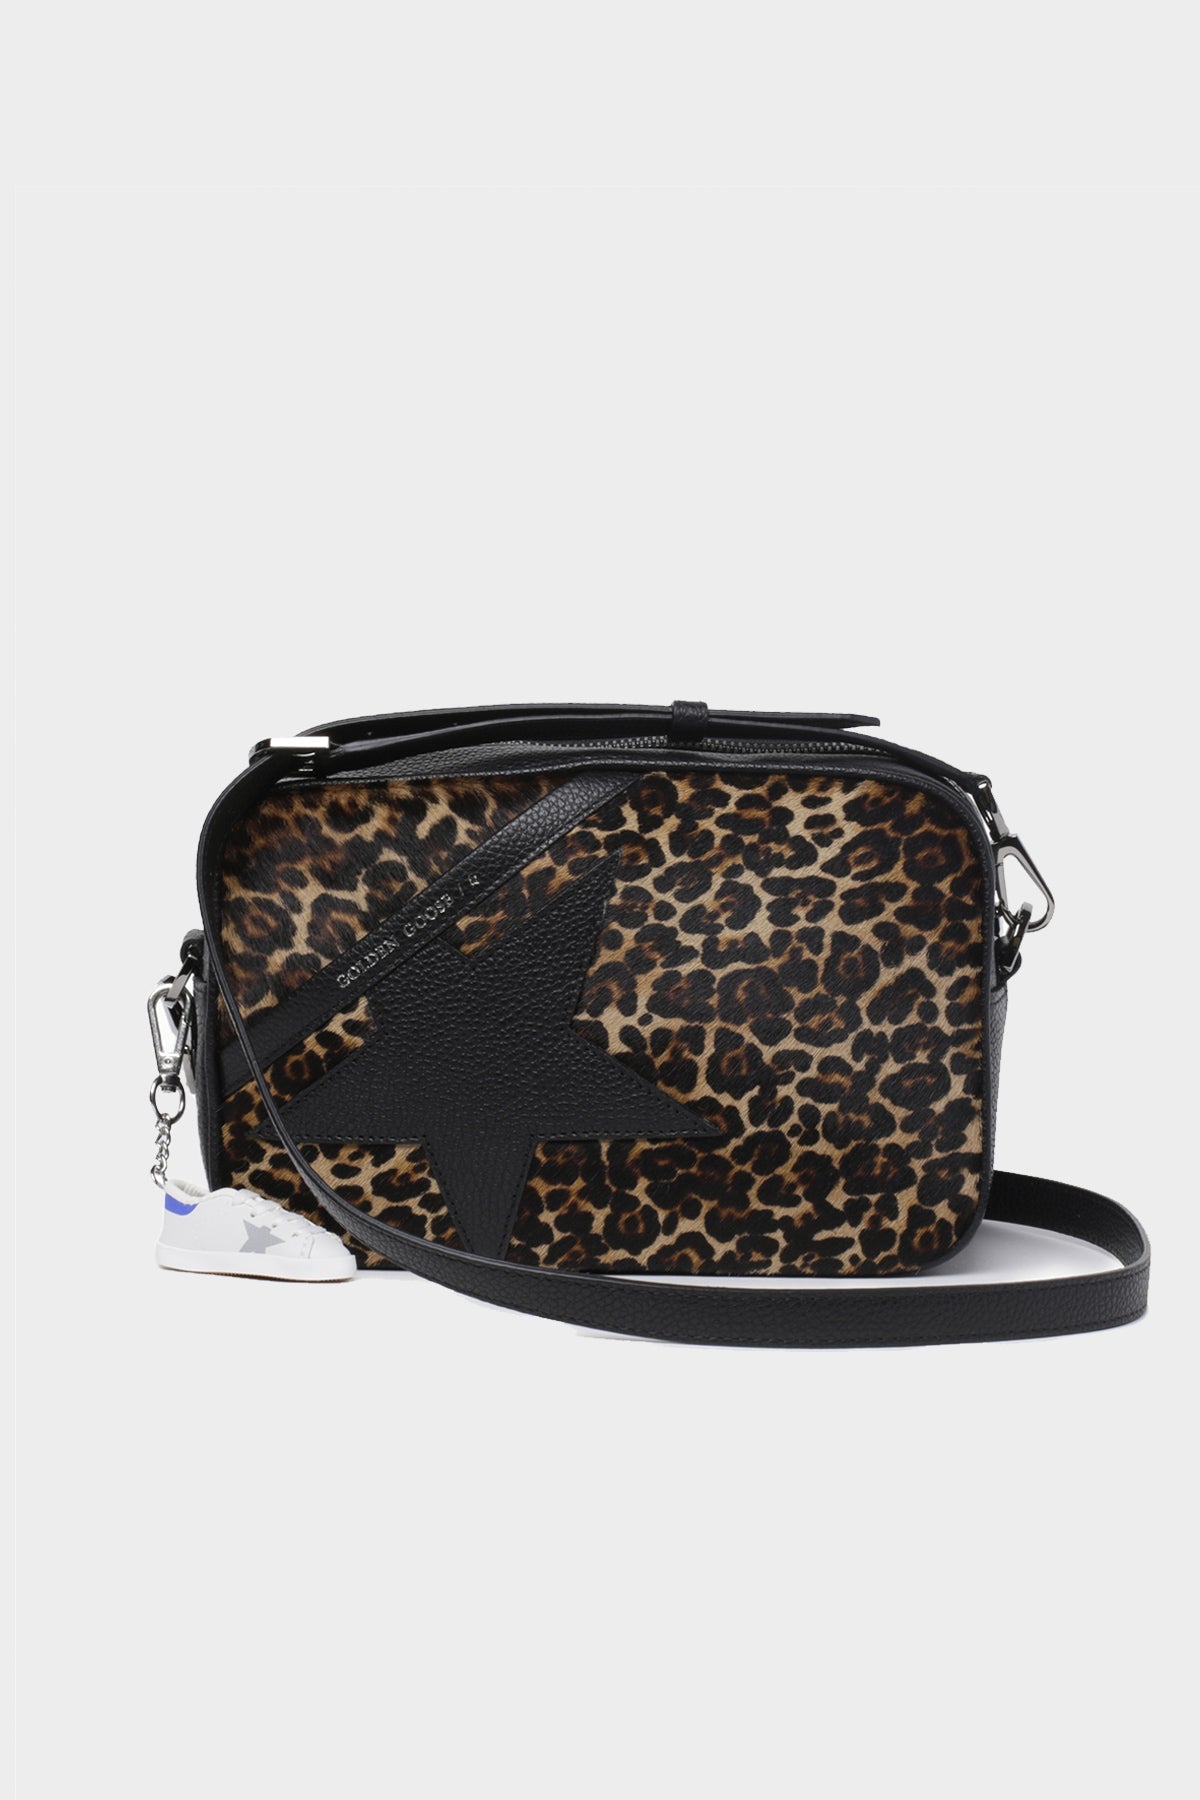 Star-Bag Front Panel Leather in Brown Leopard - shop-olivia.com